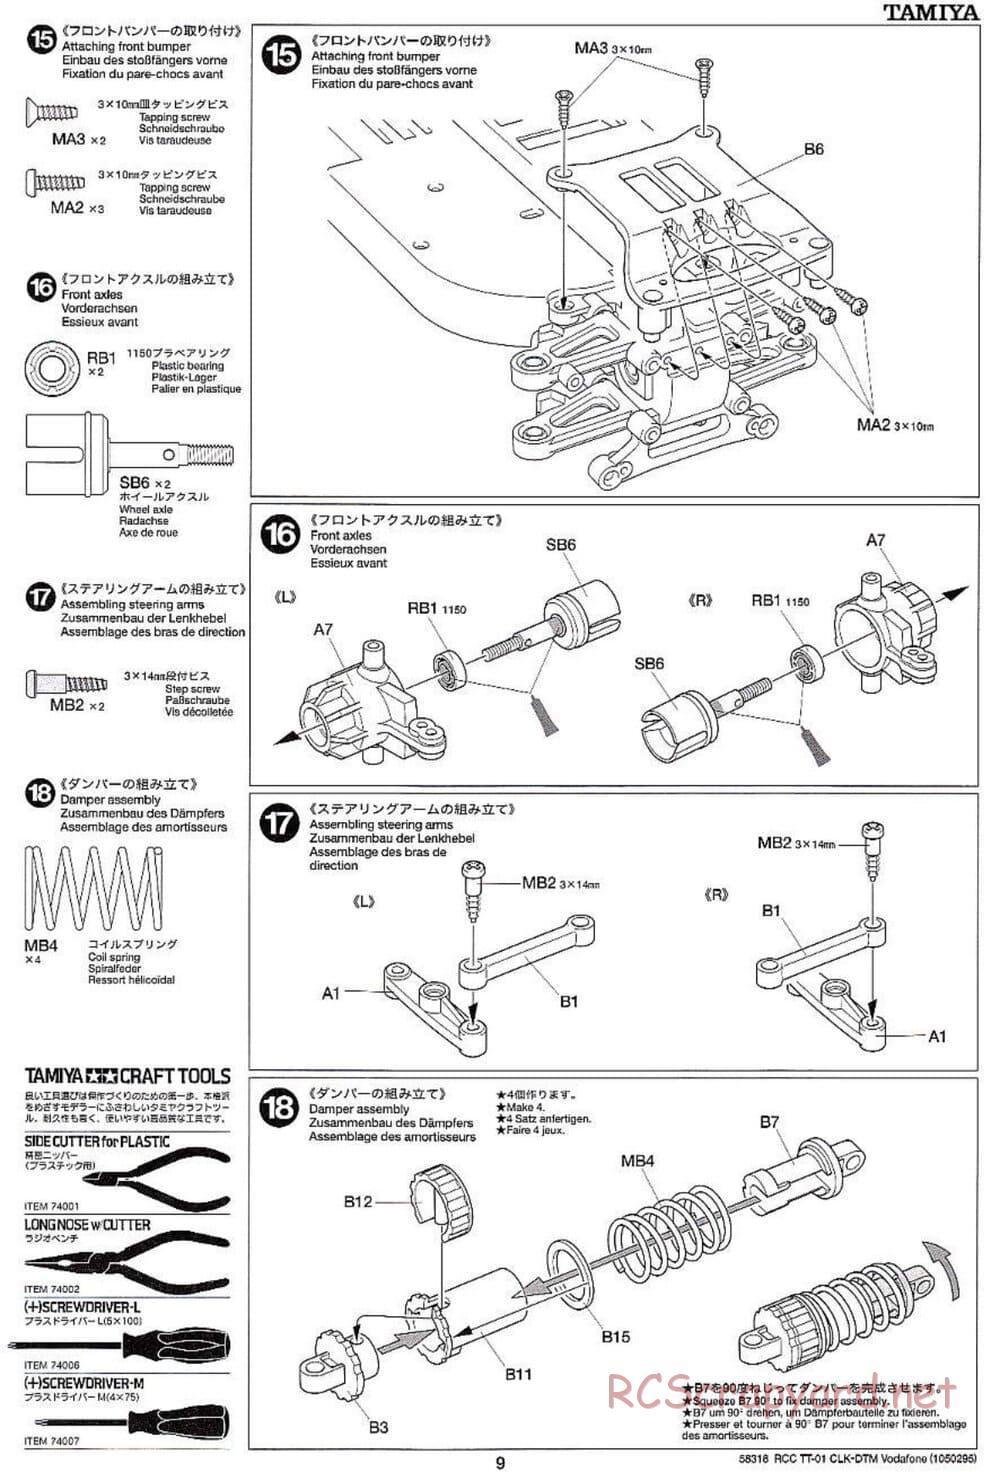 Tamiya - Mercedes-Benz CLK-DTM Team Vodafone AMG-Mercedes - TT-01 Chassis - Manual - Page 9